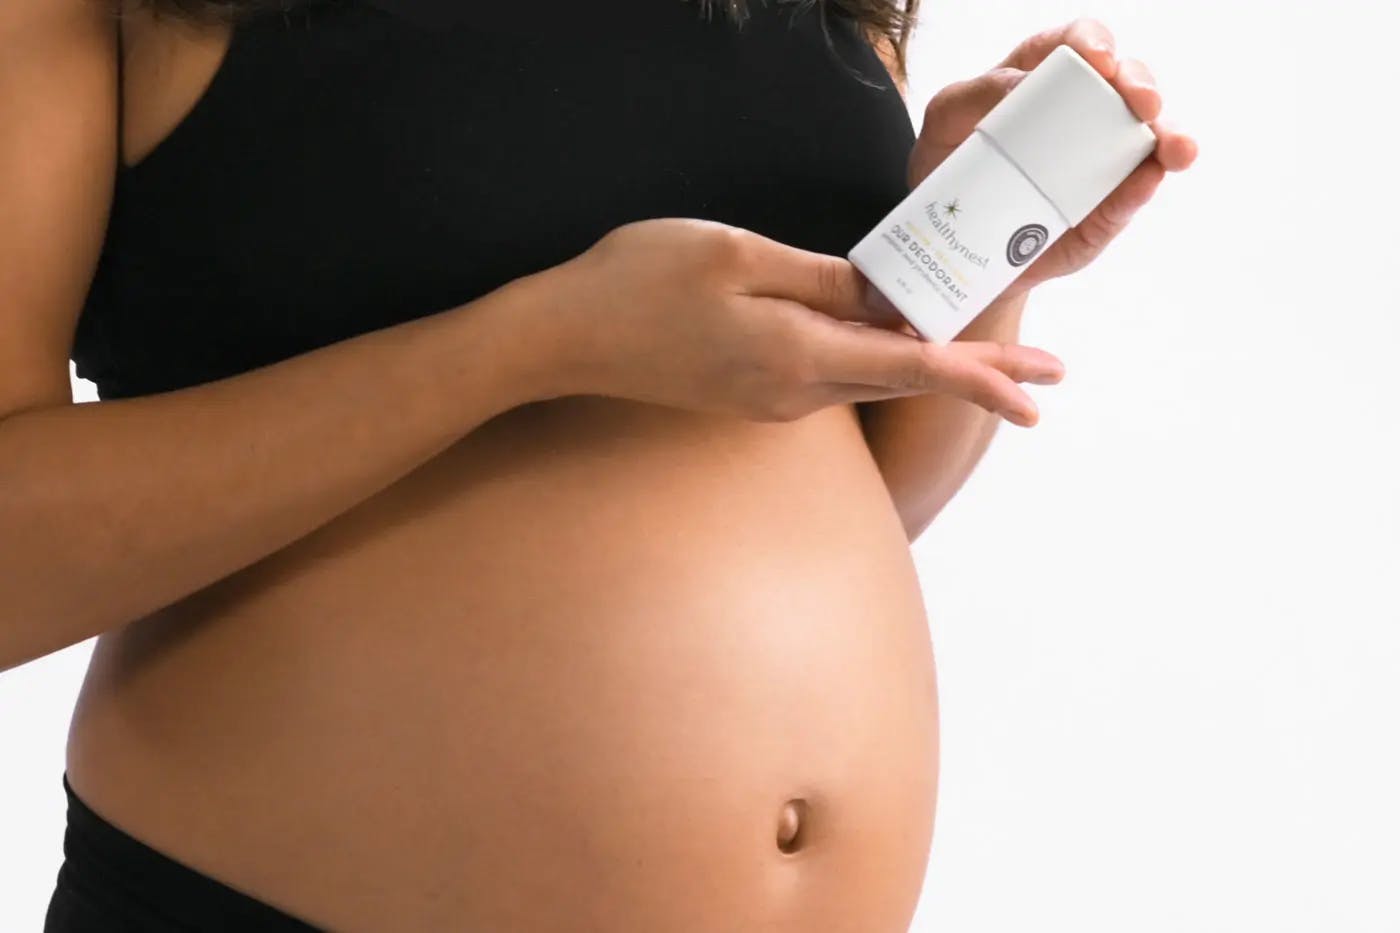 healthybaby-deodorant-pregnant-woman